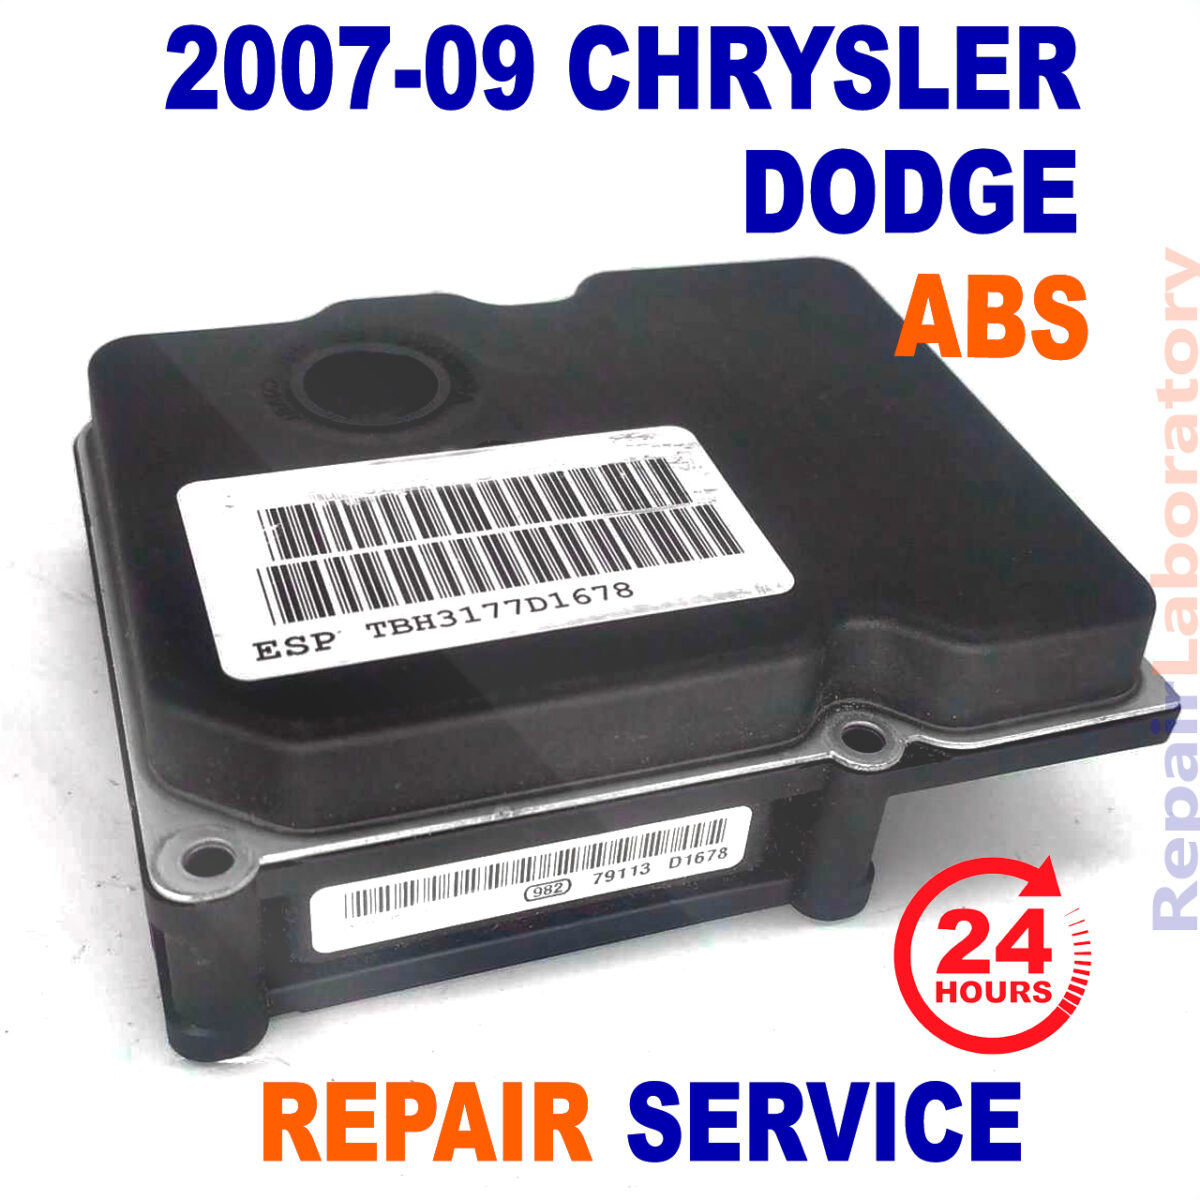 07-09_chrysler_dodge_abs_repair_service